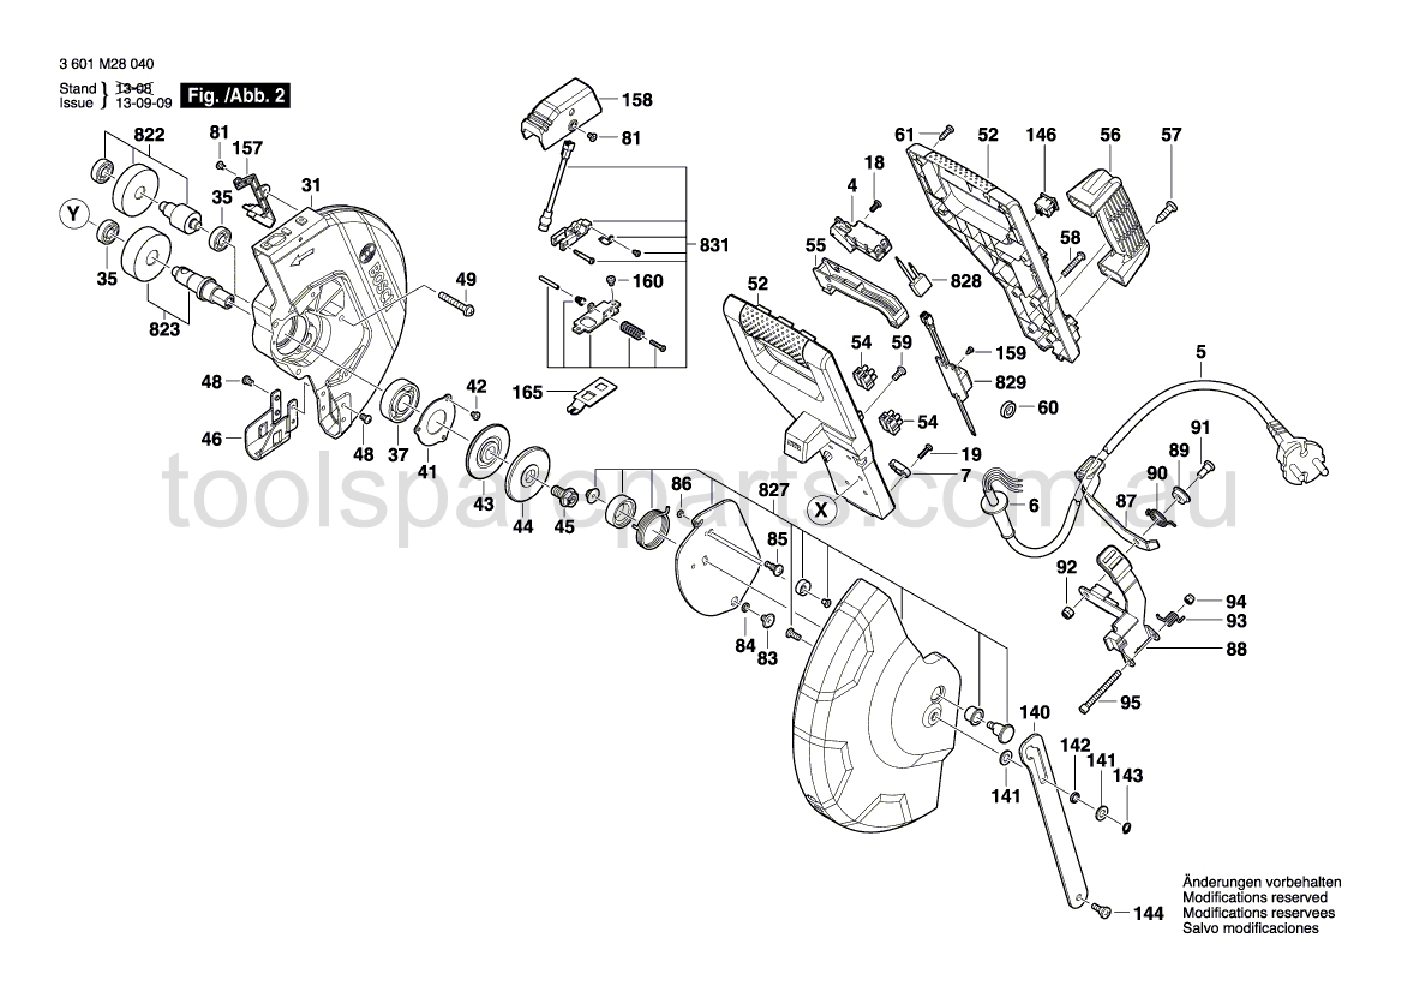 Bosch GCD 12 JL 3601M28040  Diagram 2